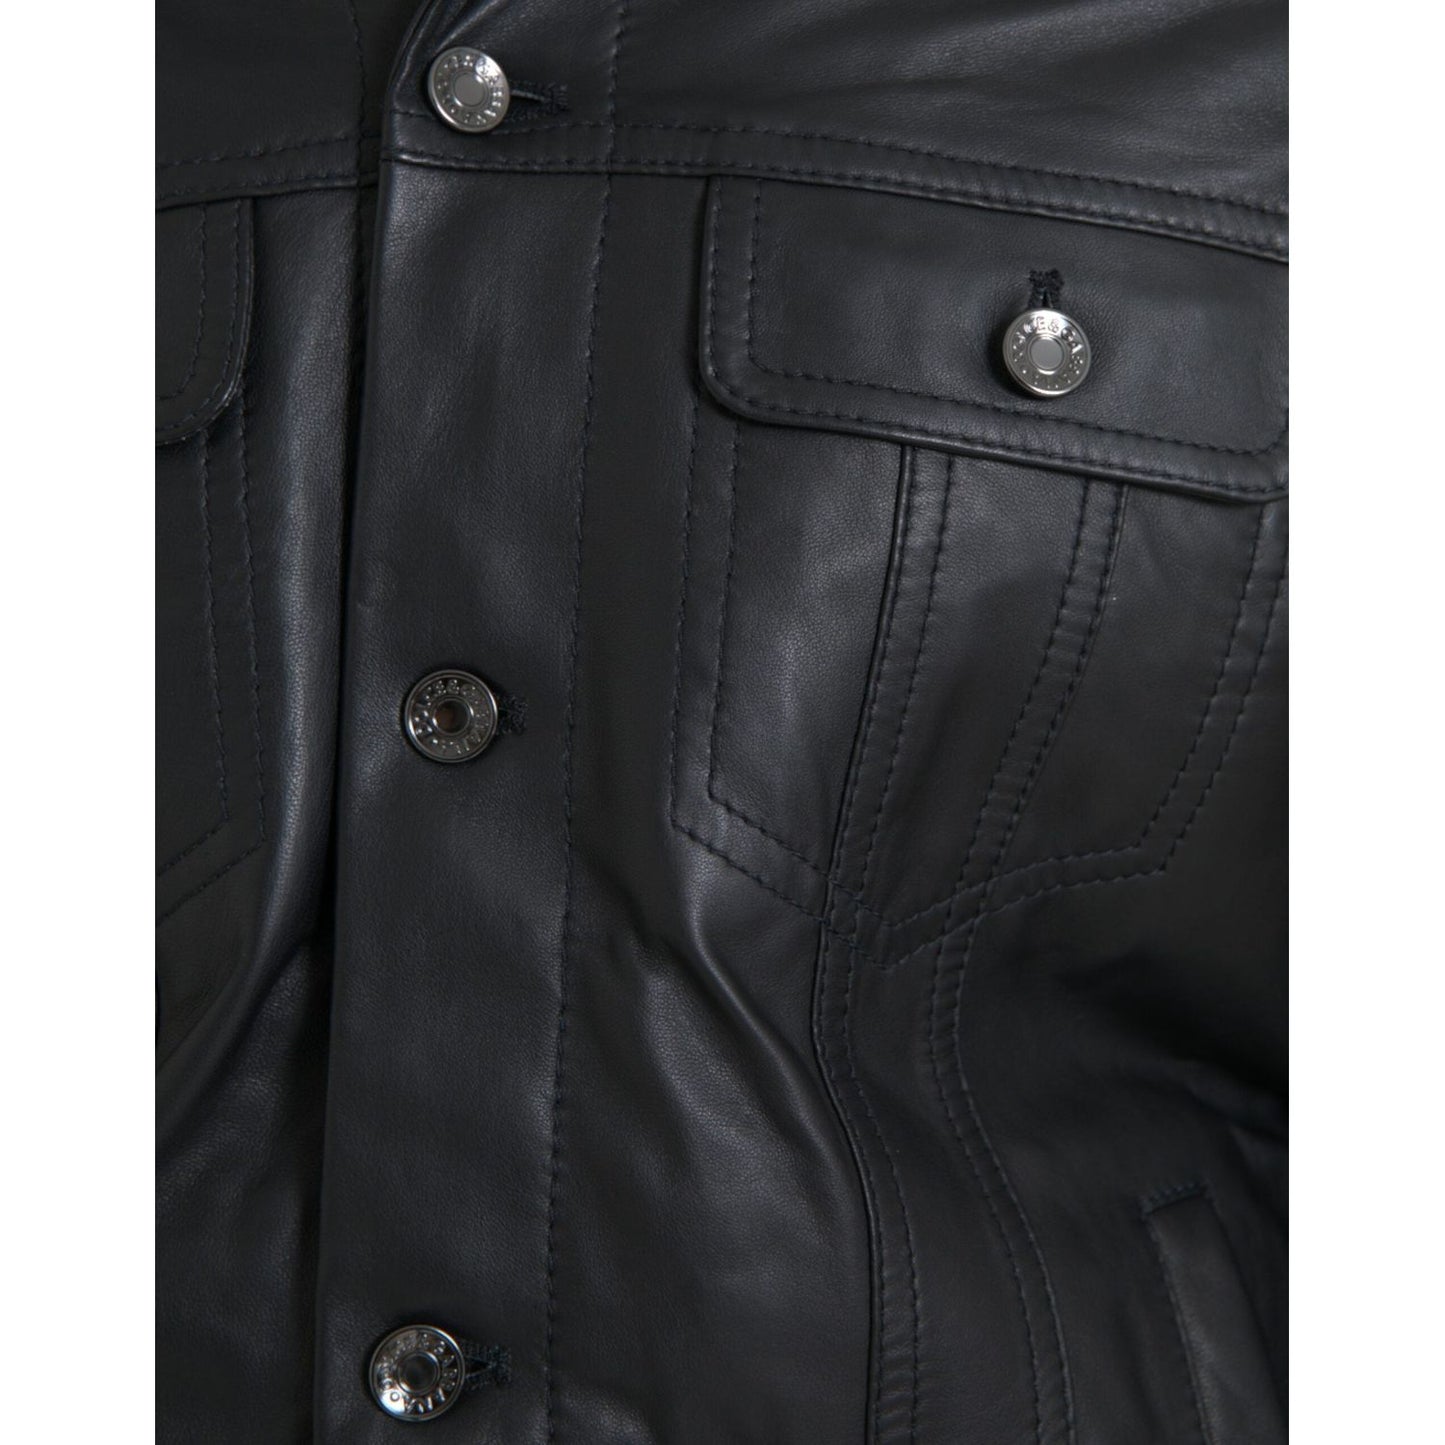 Dolce & Gabbana Black Leather Fur Collar Biker Coat Jacket black-leather-fur-collar-biker-coat-jacket